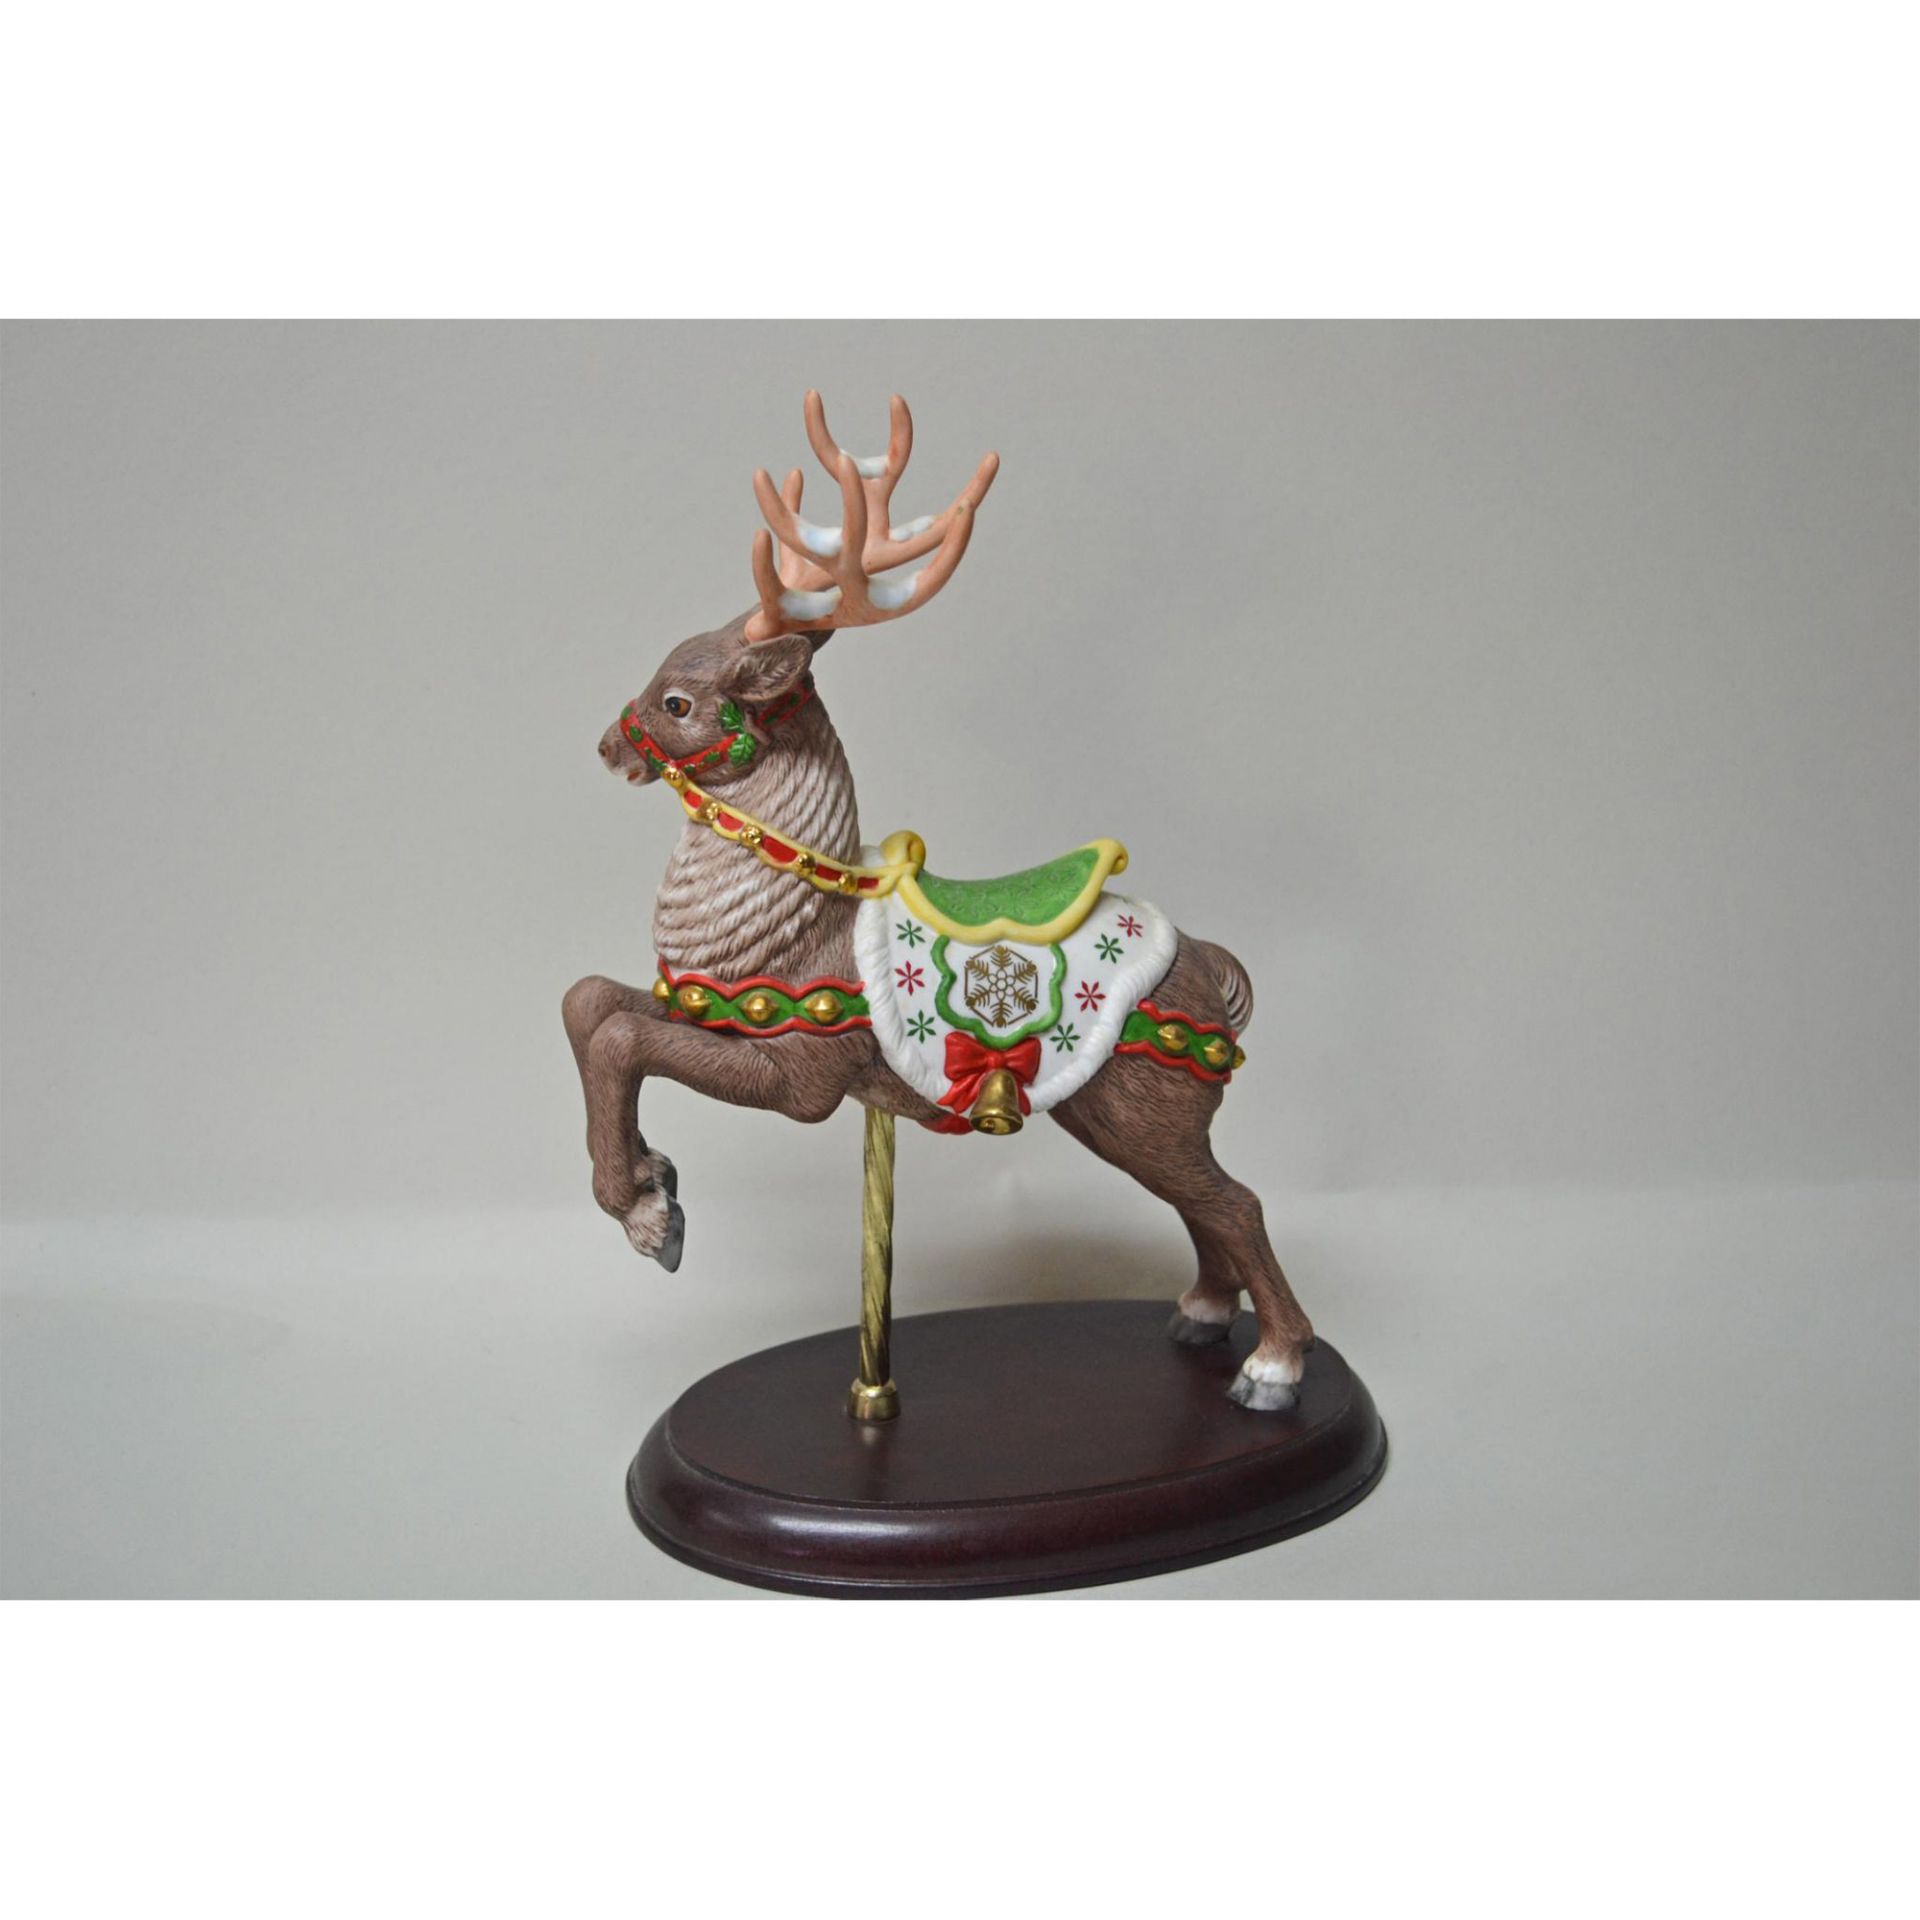 Lenox Vintage 1989 Carousel Reindeer Figurine - Image 2 of 4